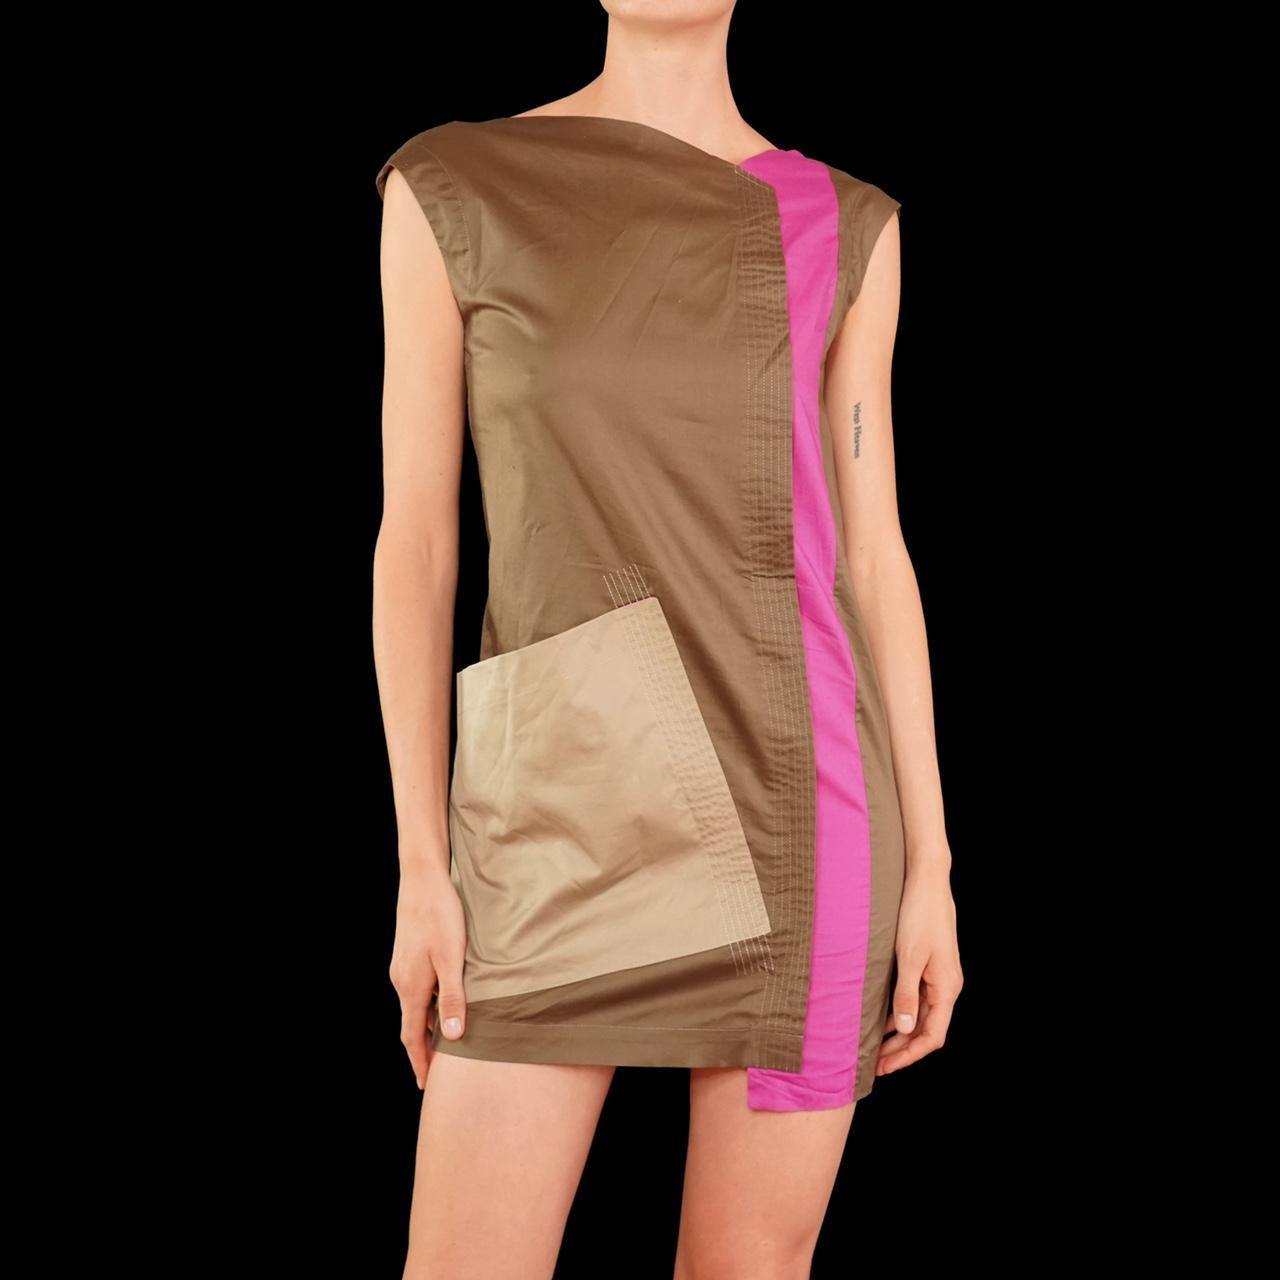 Jil Sander Women's Brown and Pink Dress